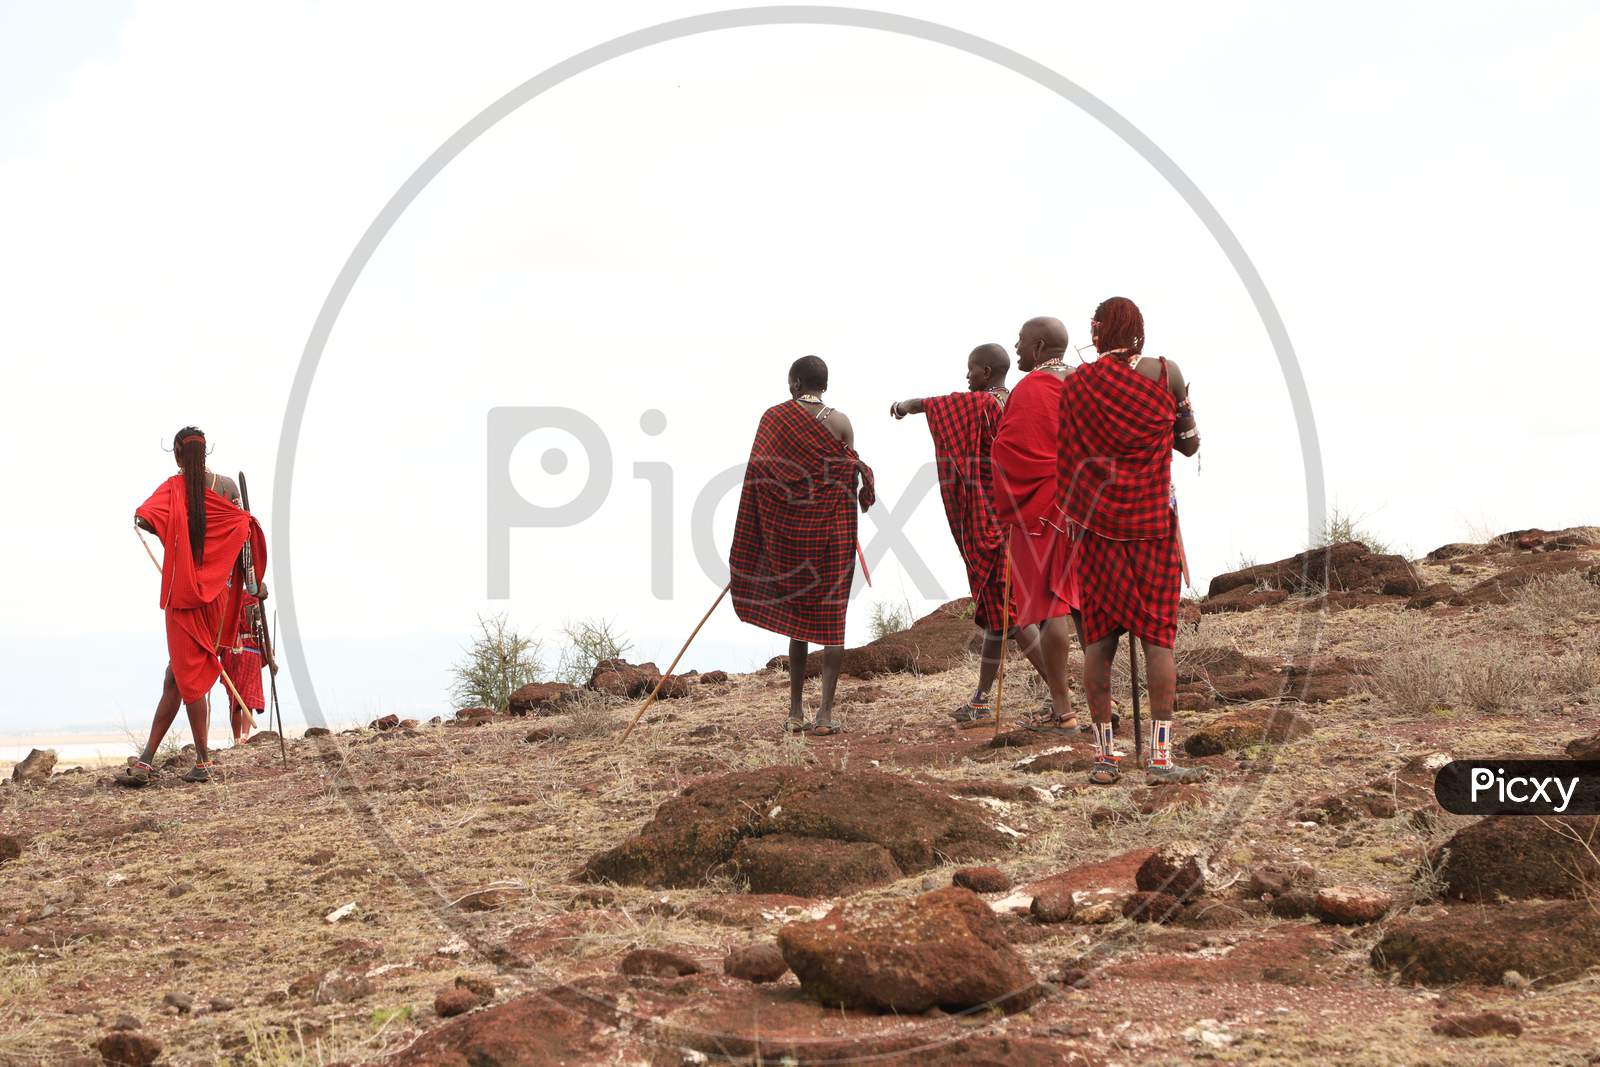 Maasai Tribal People In Masai Mara National Reserve Region, Kenya